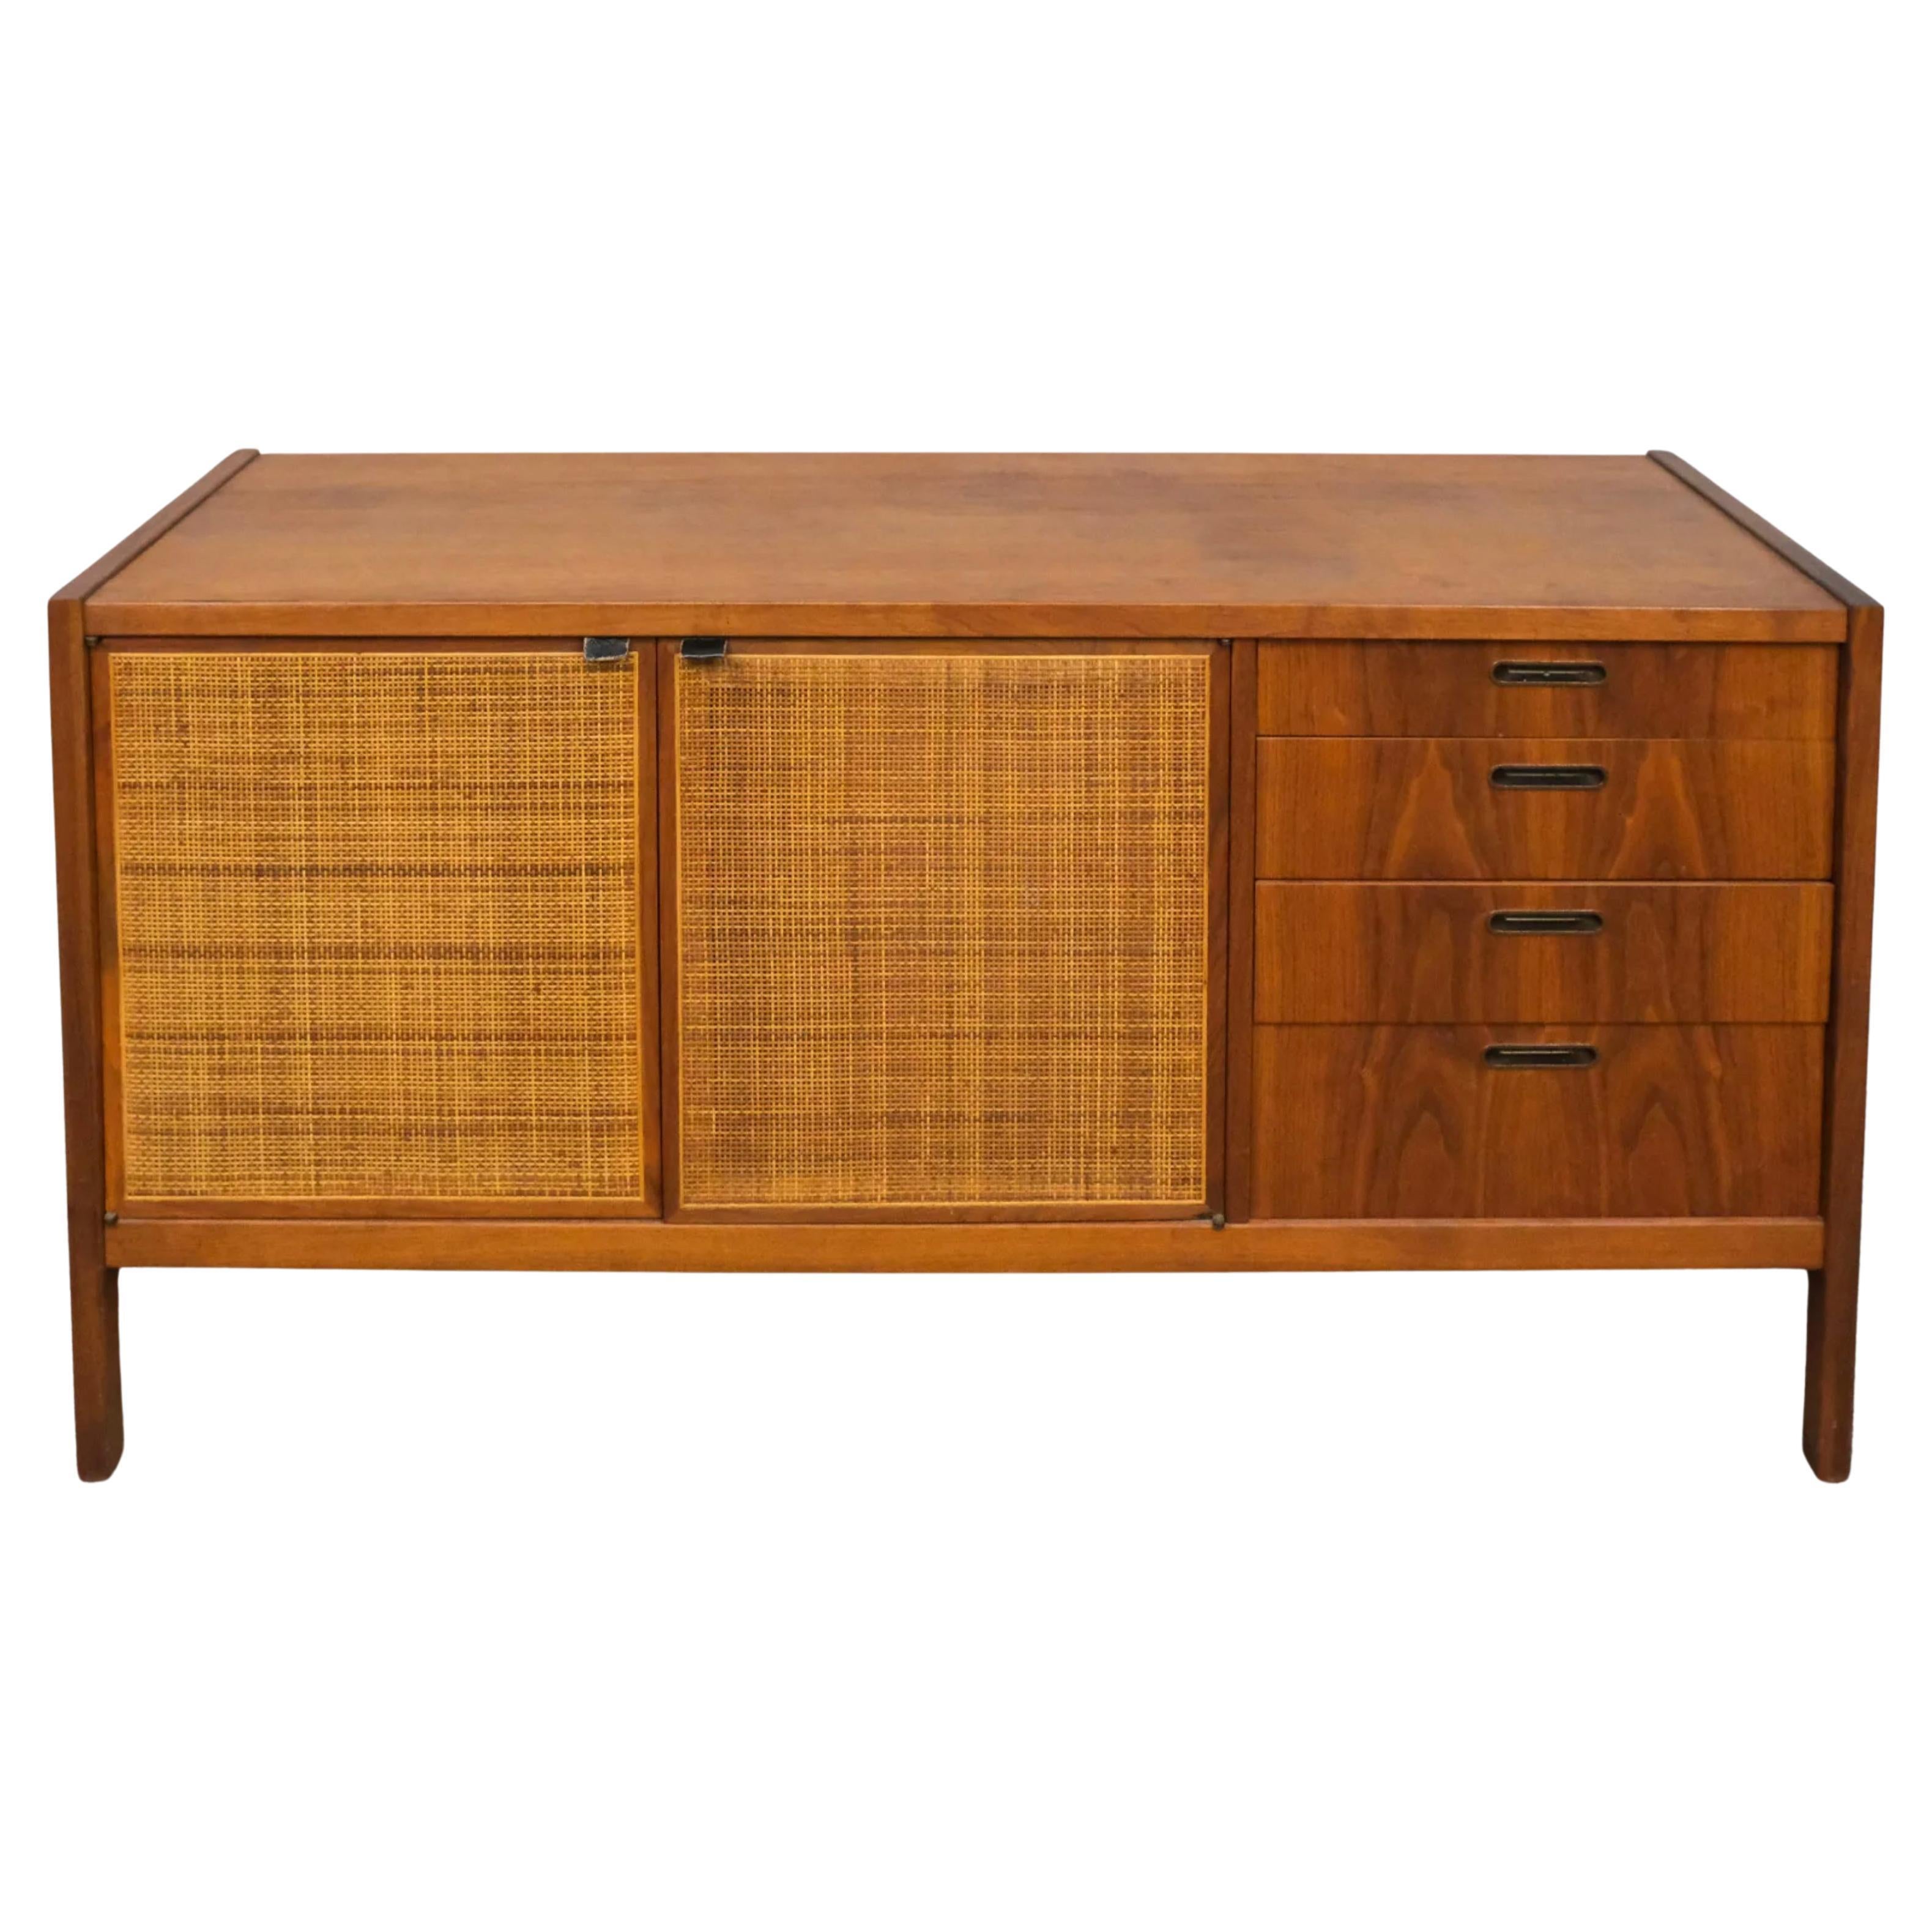 Mid century modern cane walnut credenza sideboard 4 drawer 2 door For Sale